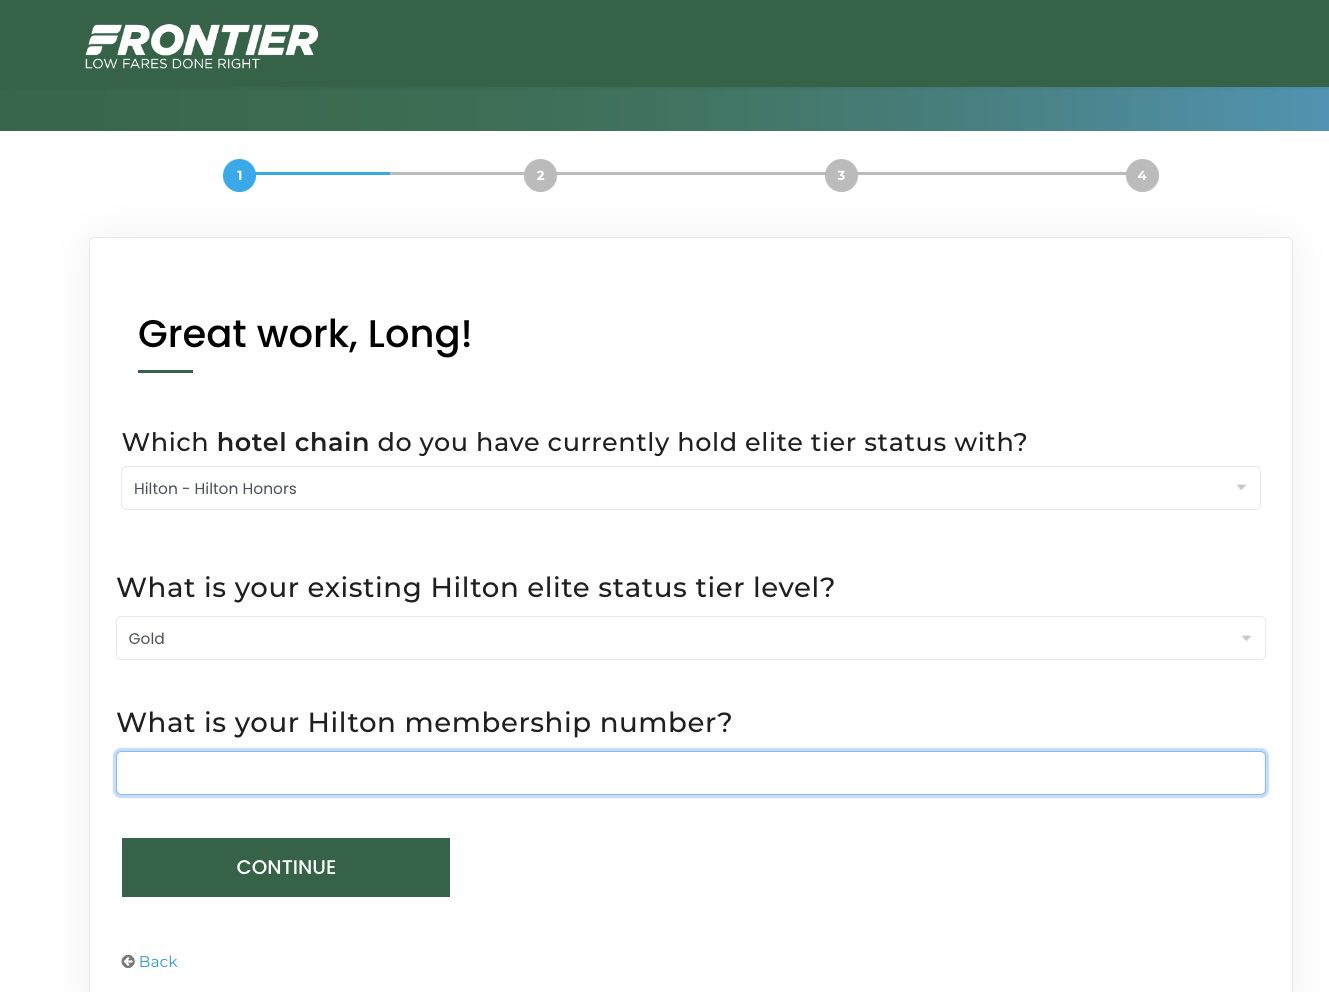 Frontier Status Match application